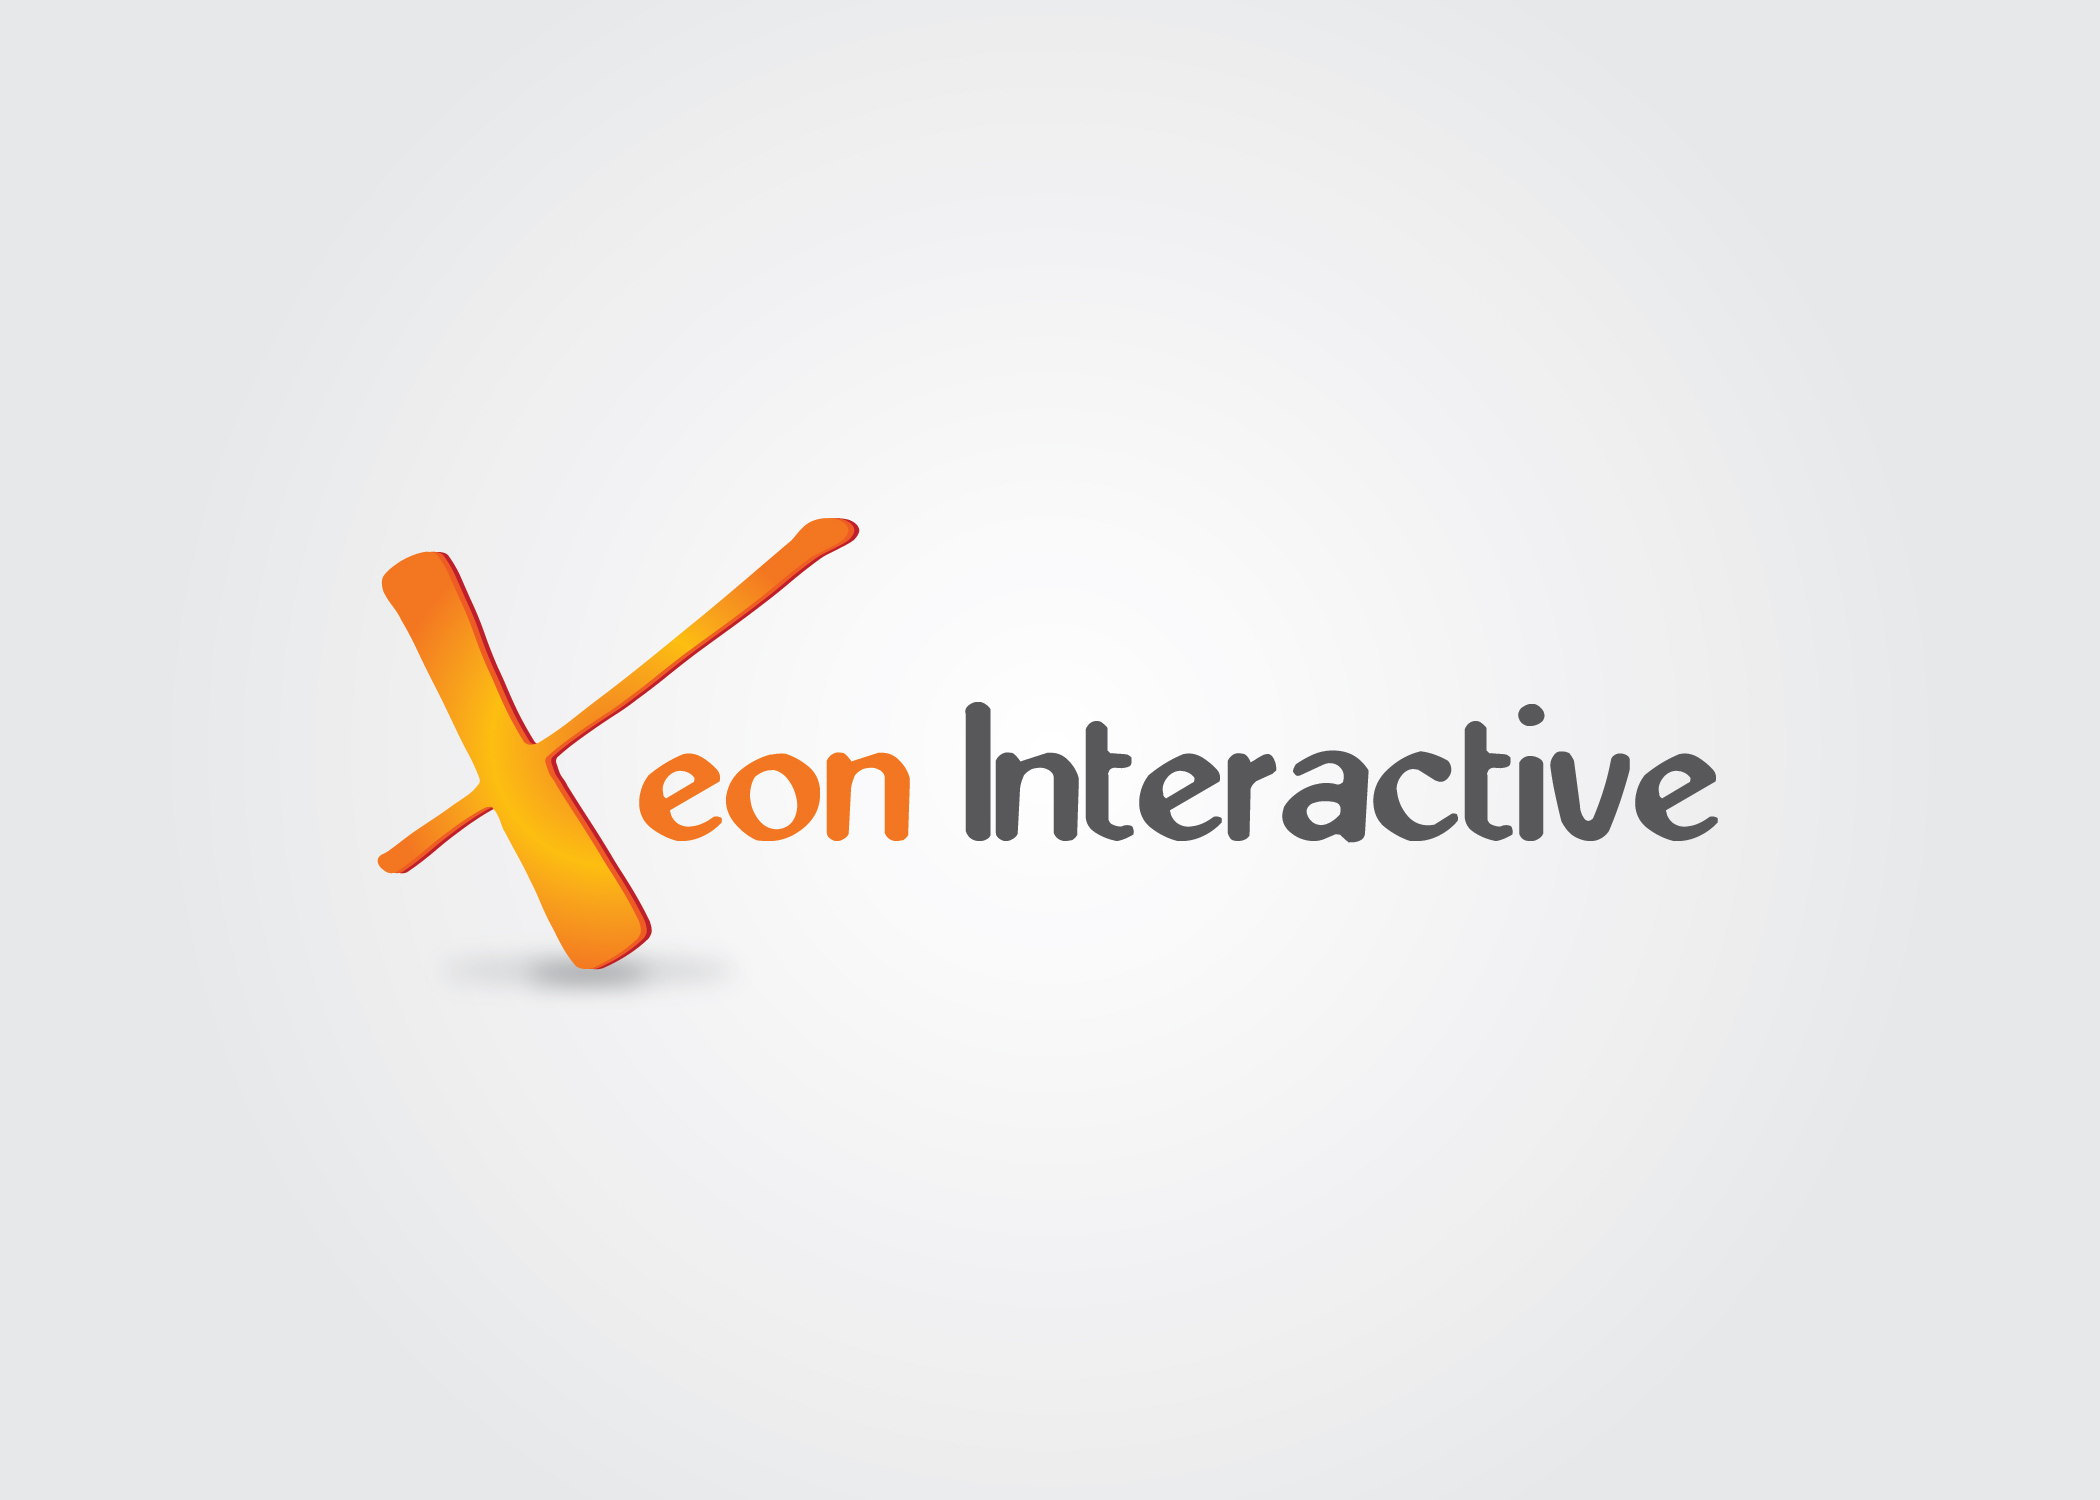 Xeon Interactive